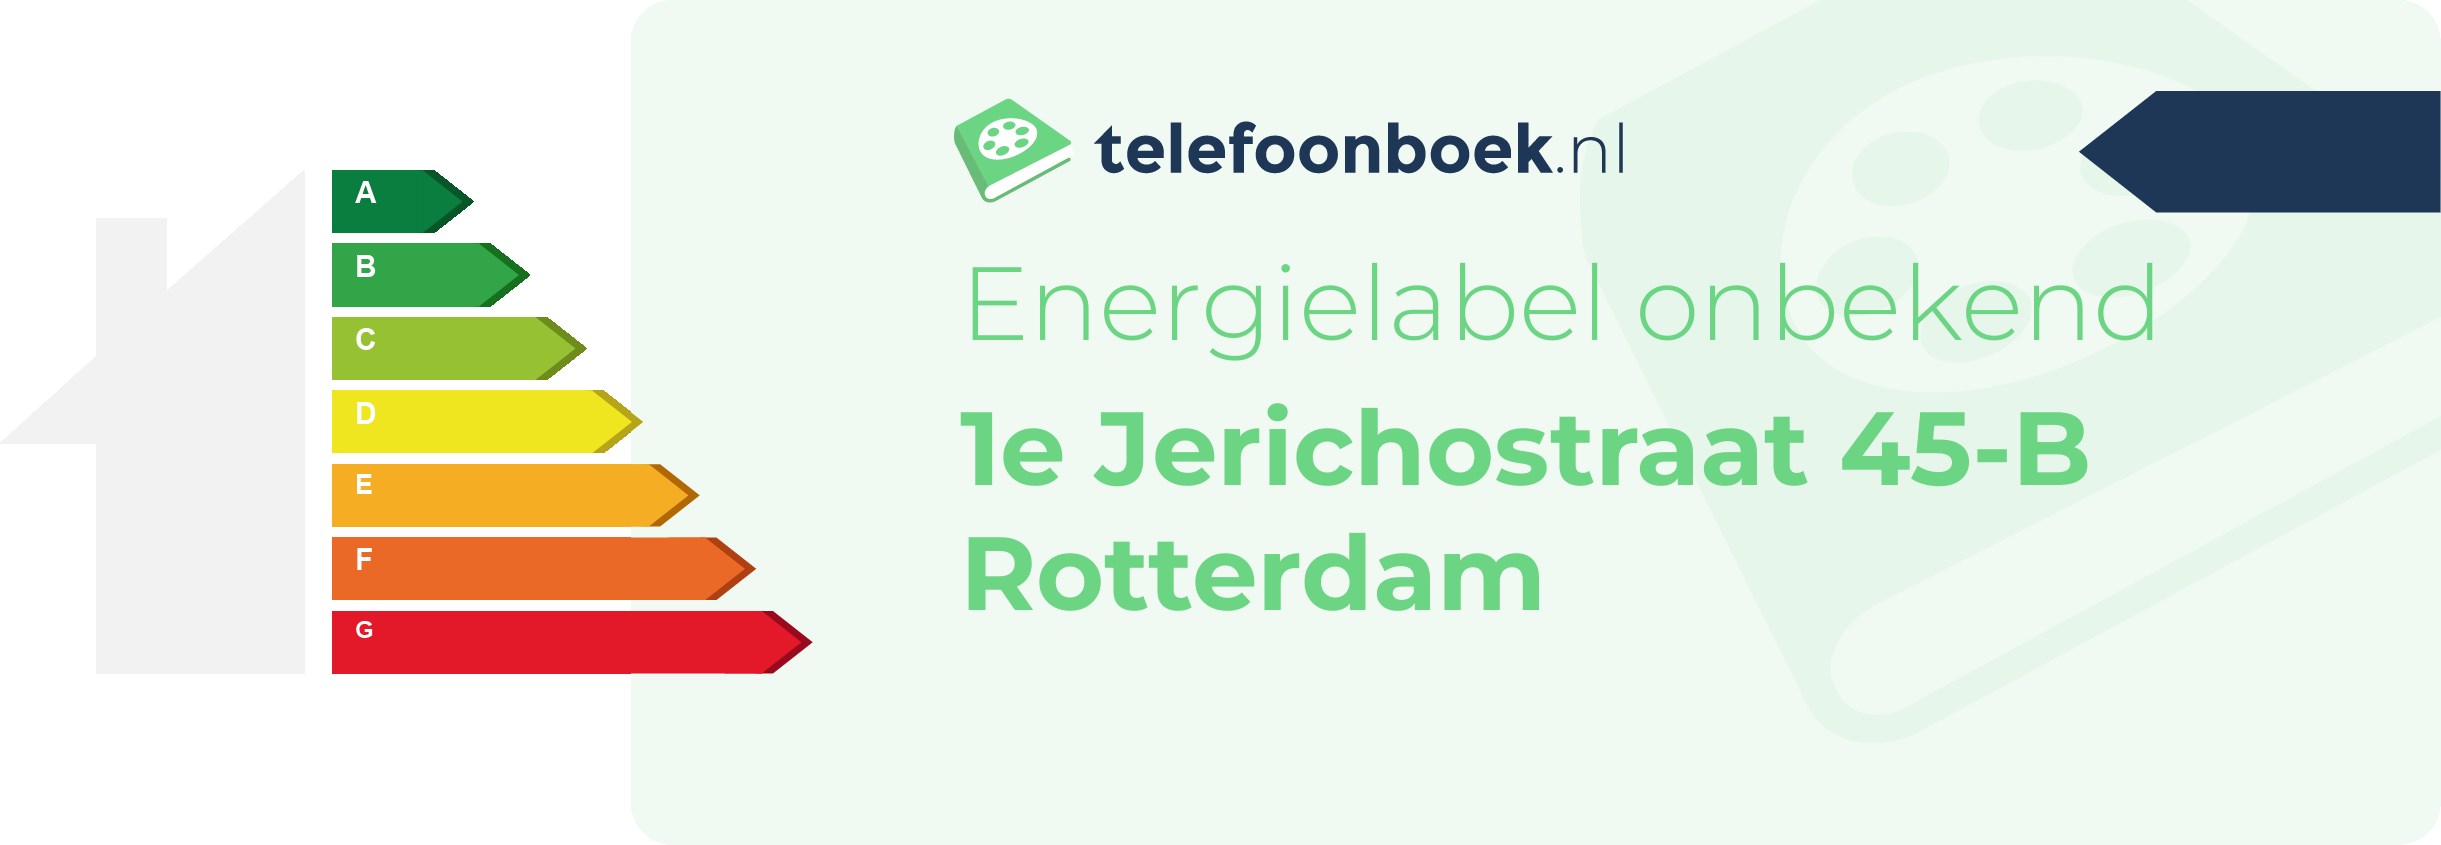 Energielabel 1e Jerichostraat 45-B Rotterdam